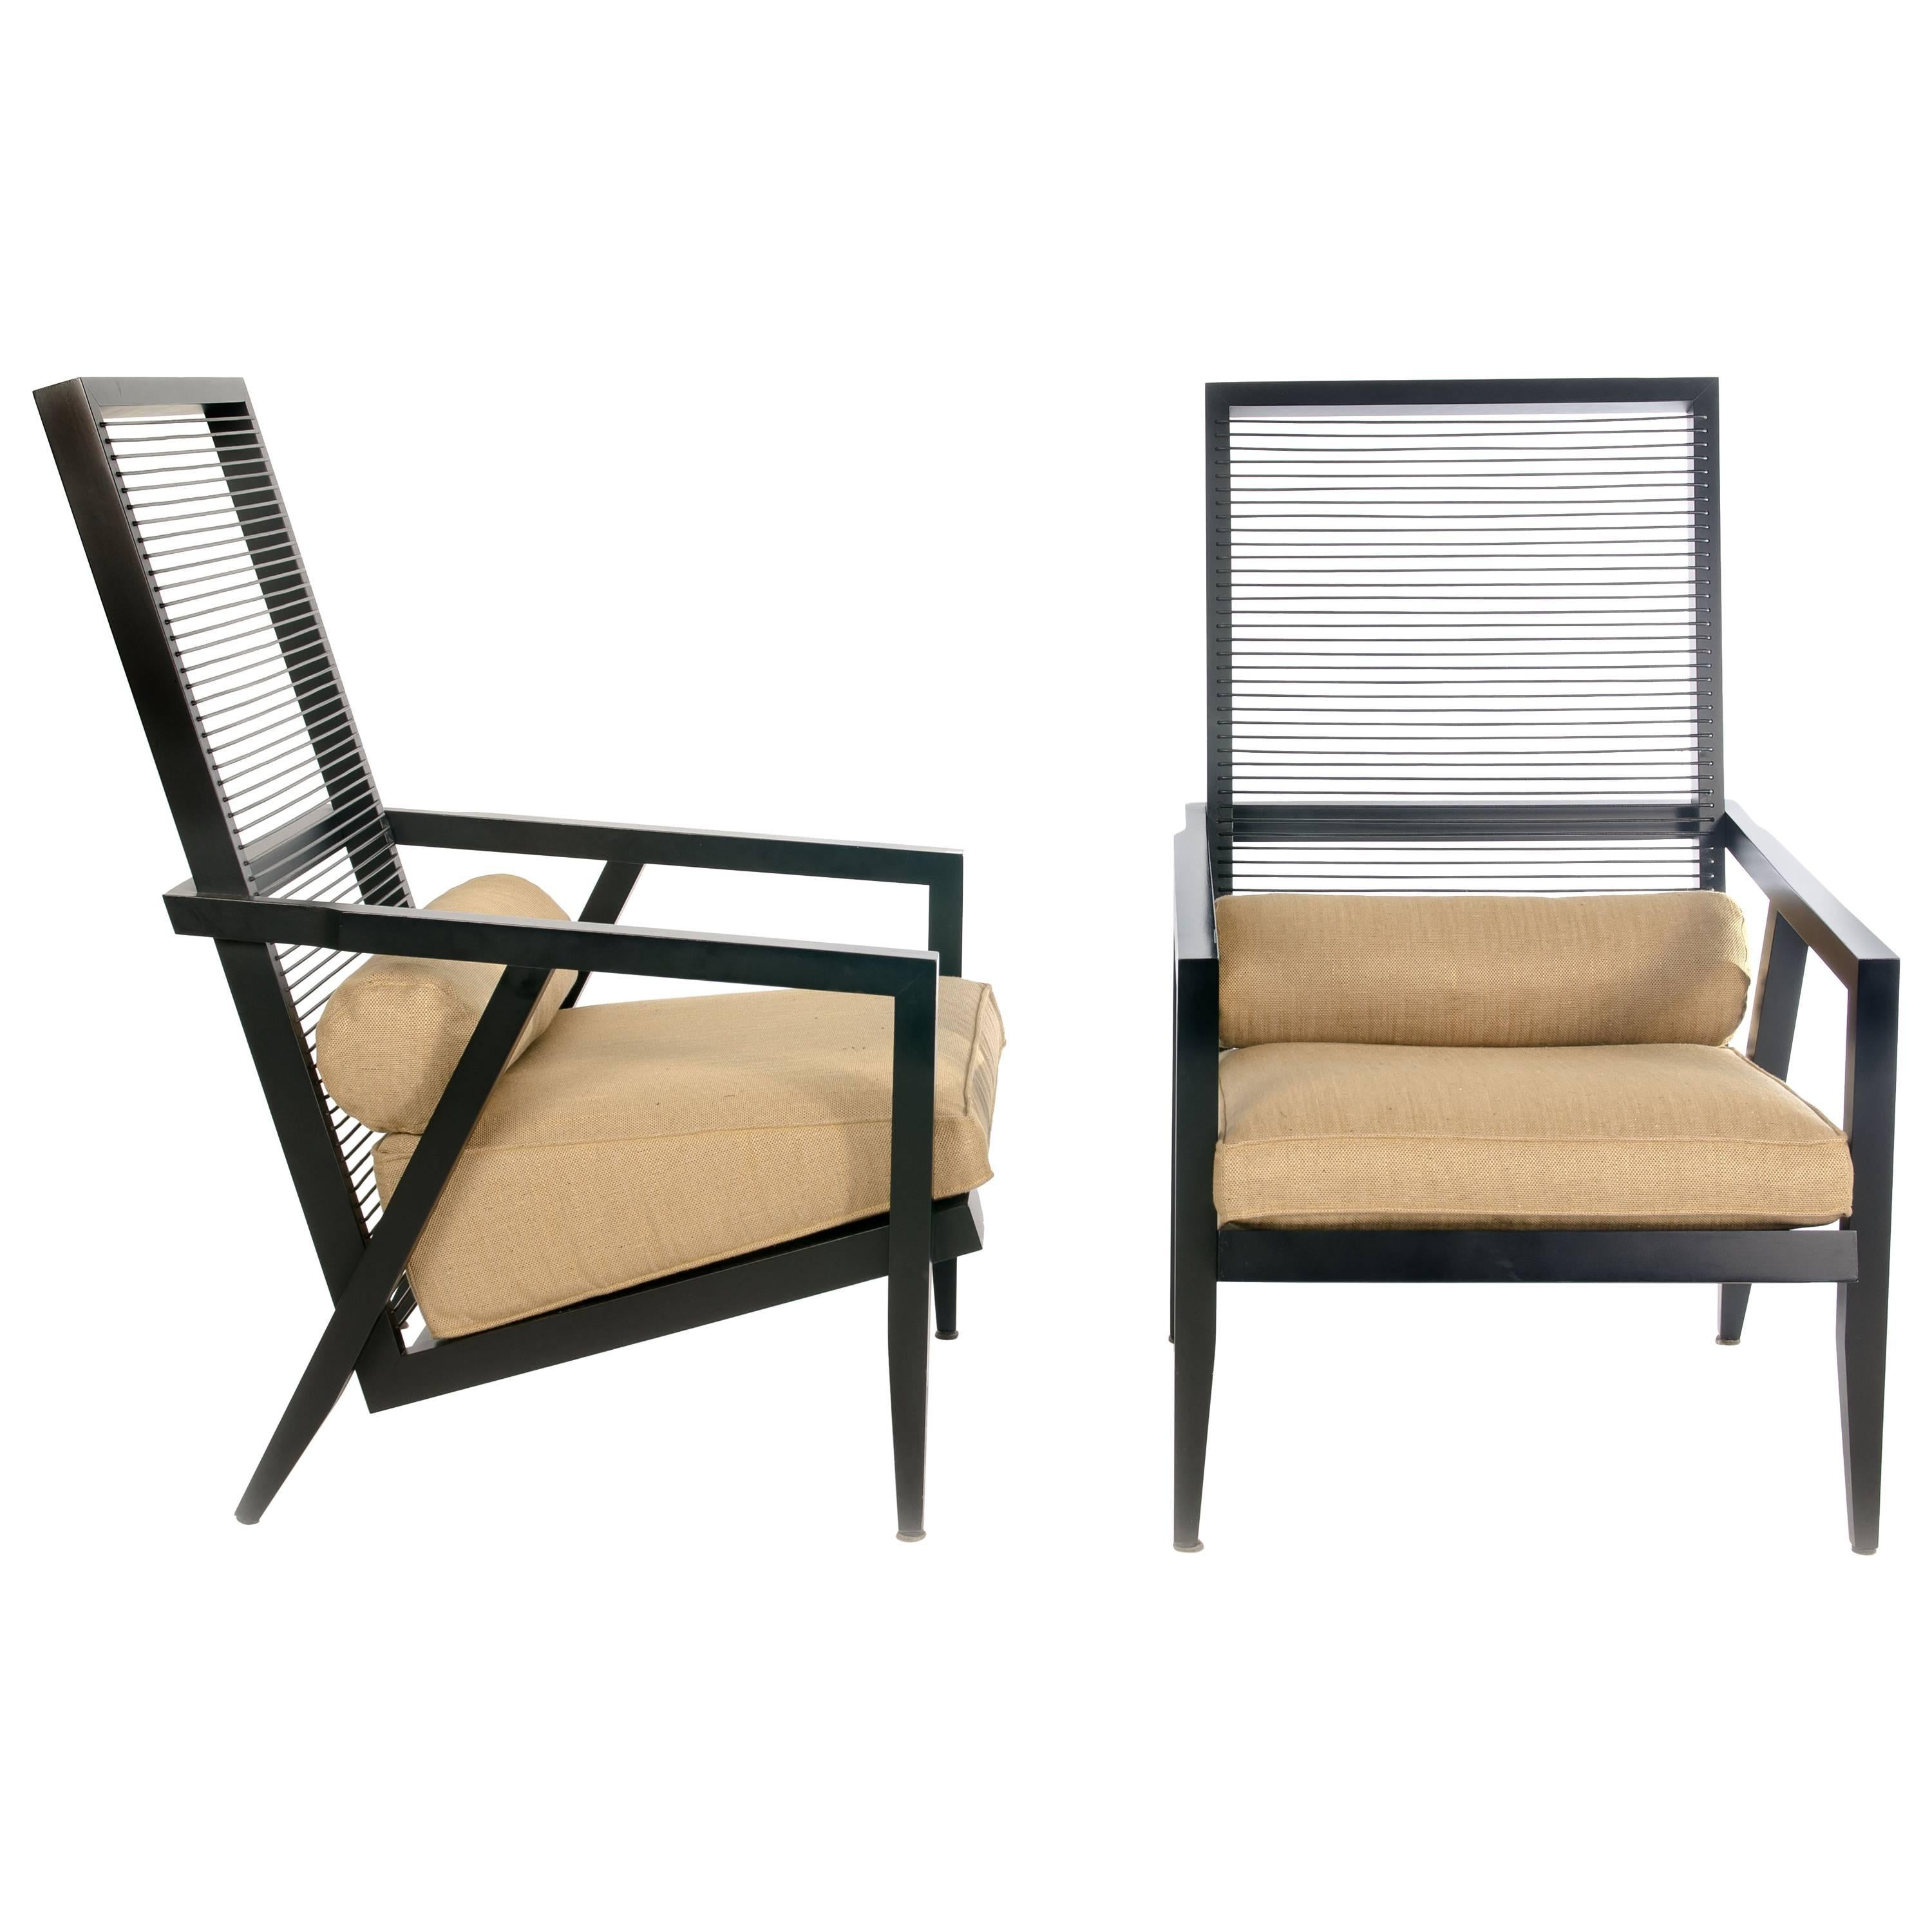 Pierantonio Bonacina, Pair of 'Astoria Hb' Lounge Chairs, 1990s